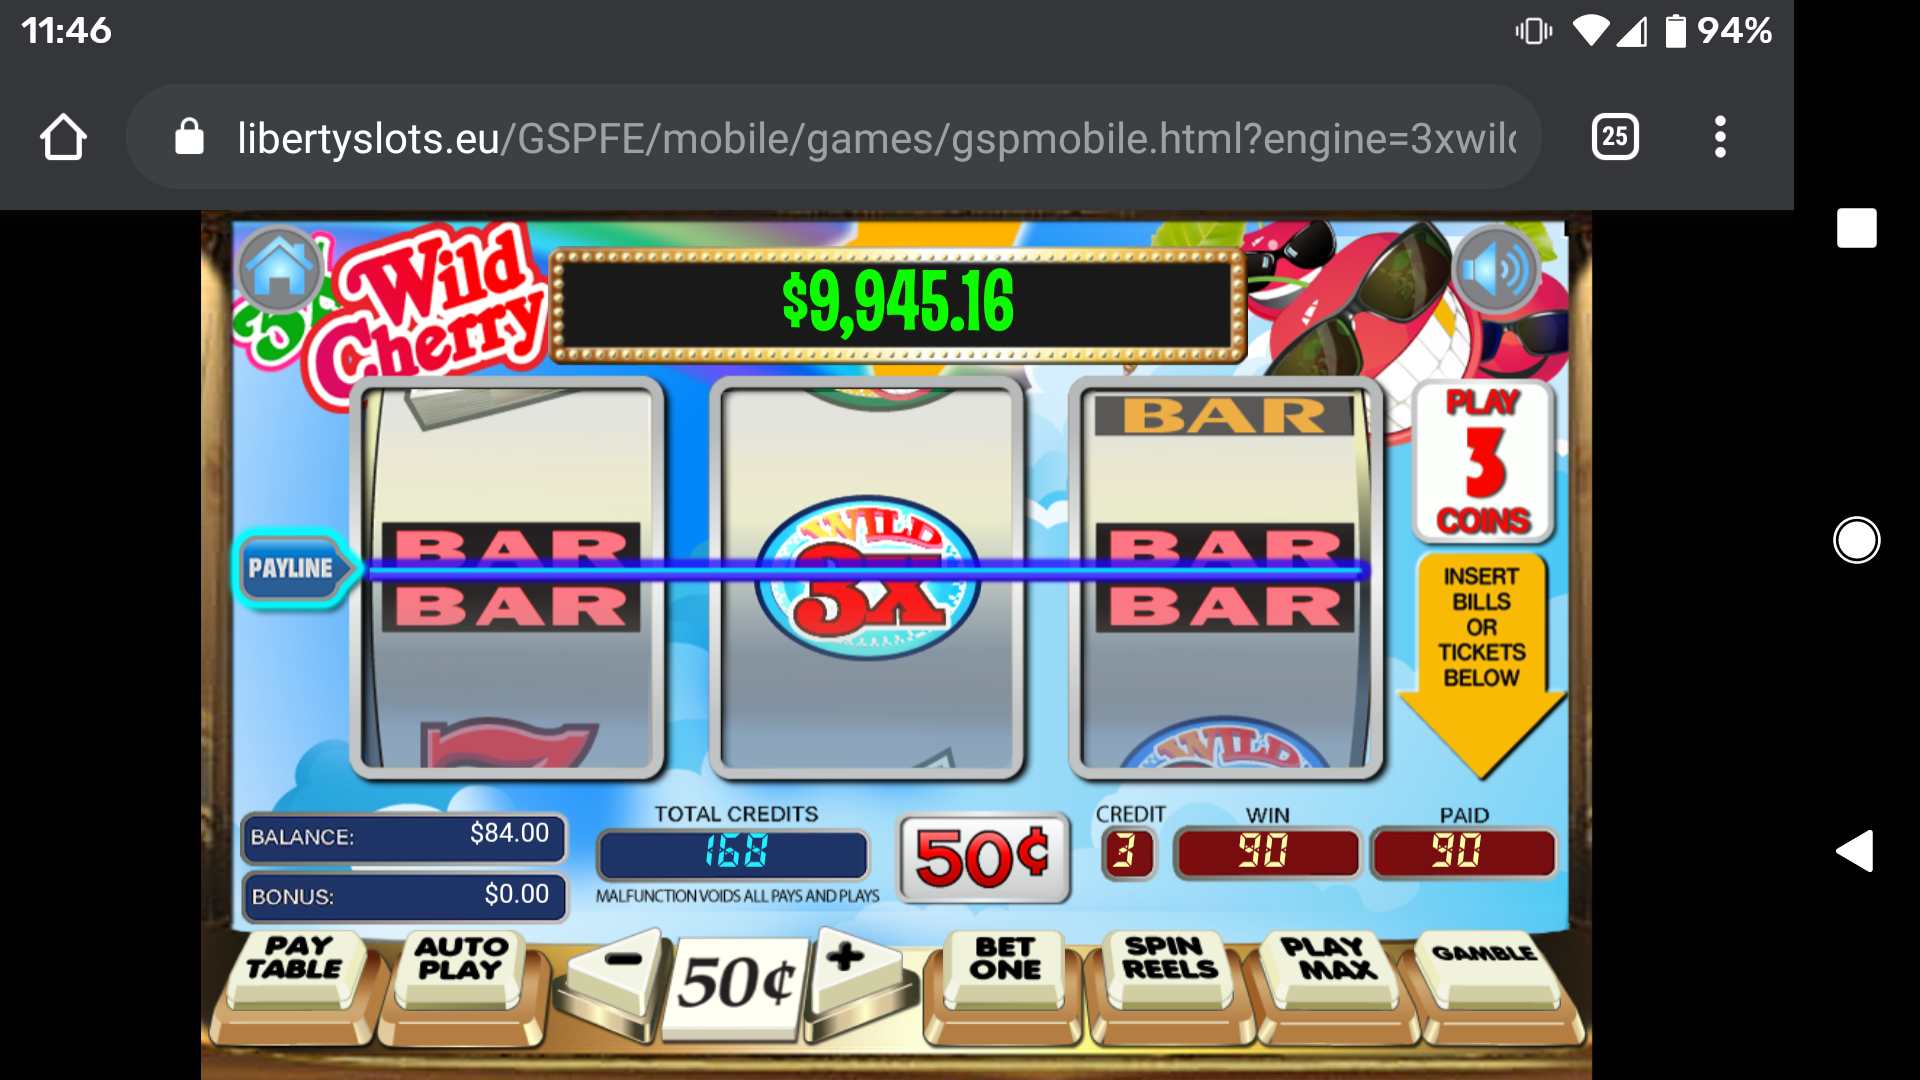 liberty slots casino instant flash play